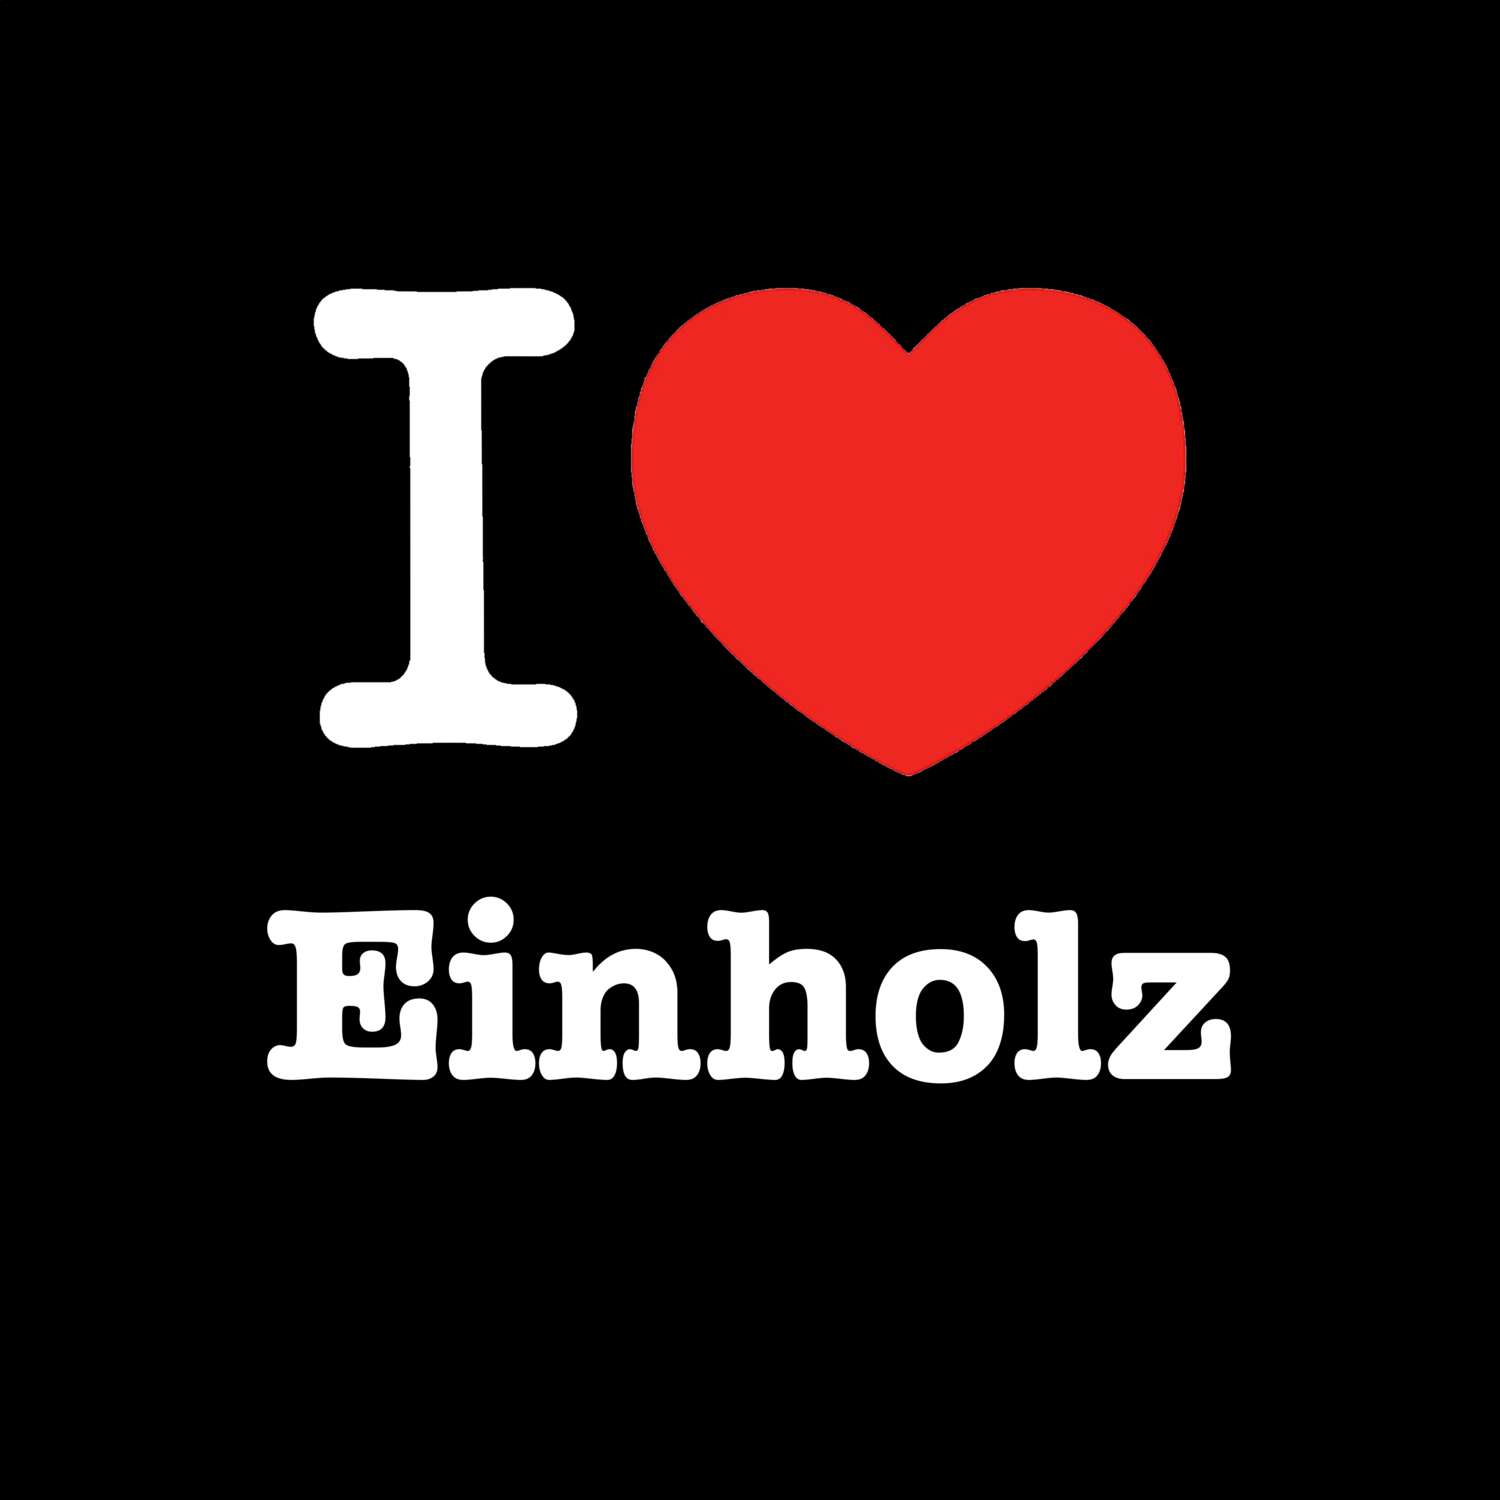 Einholz T-Shirt »I love«